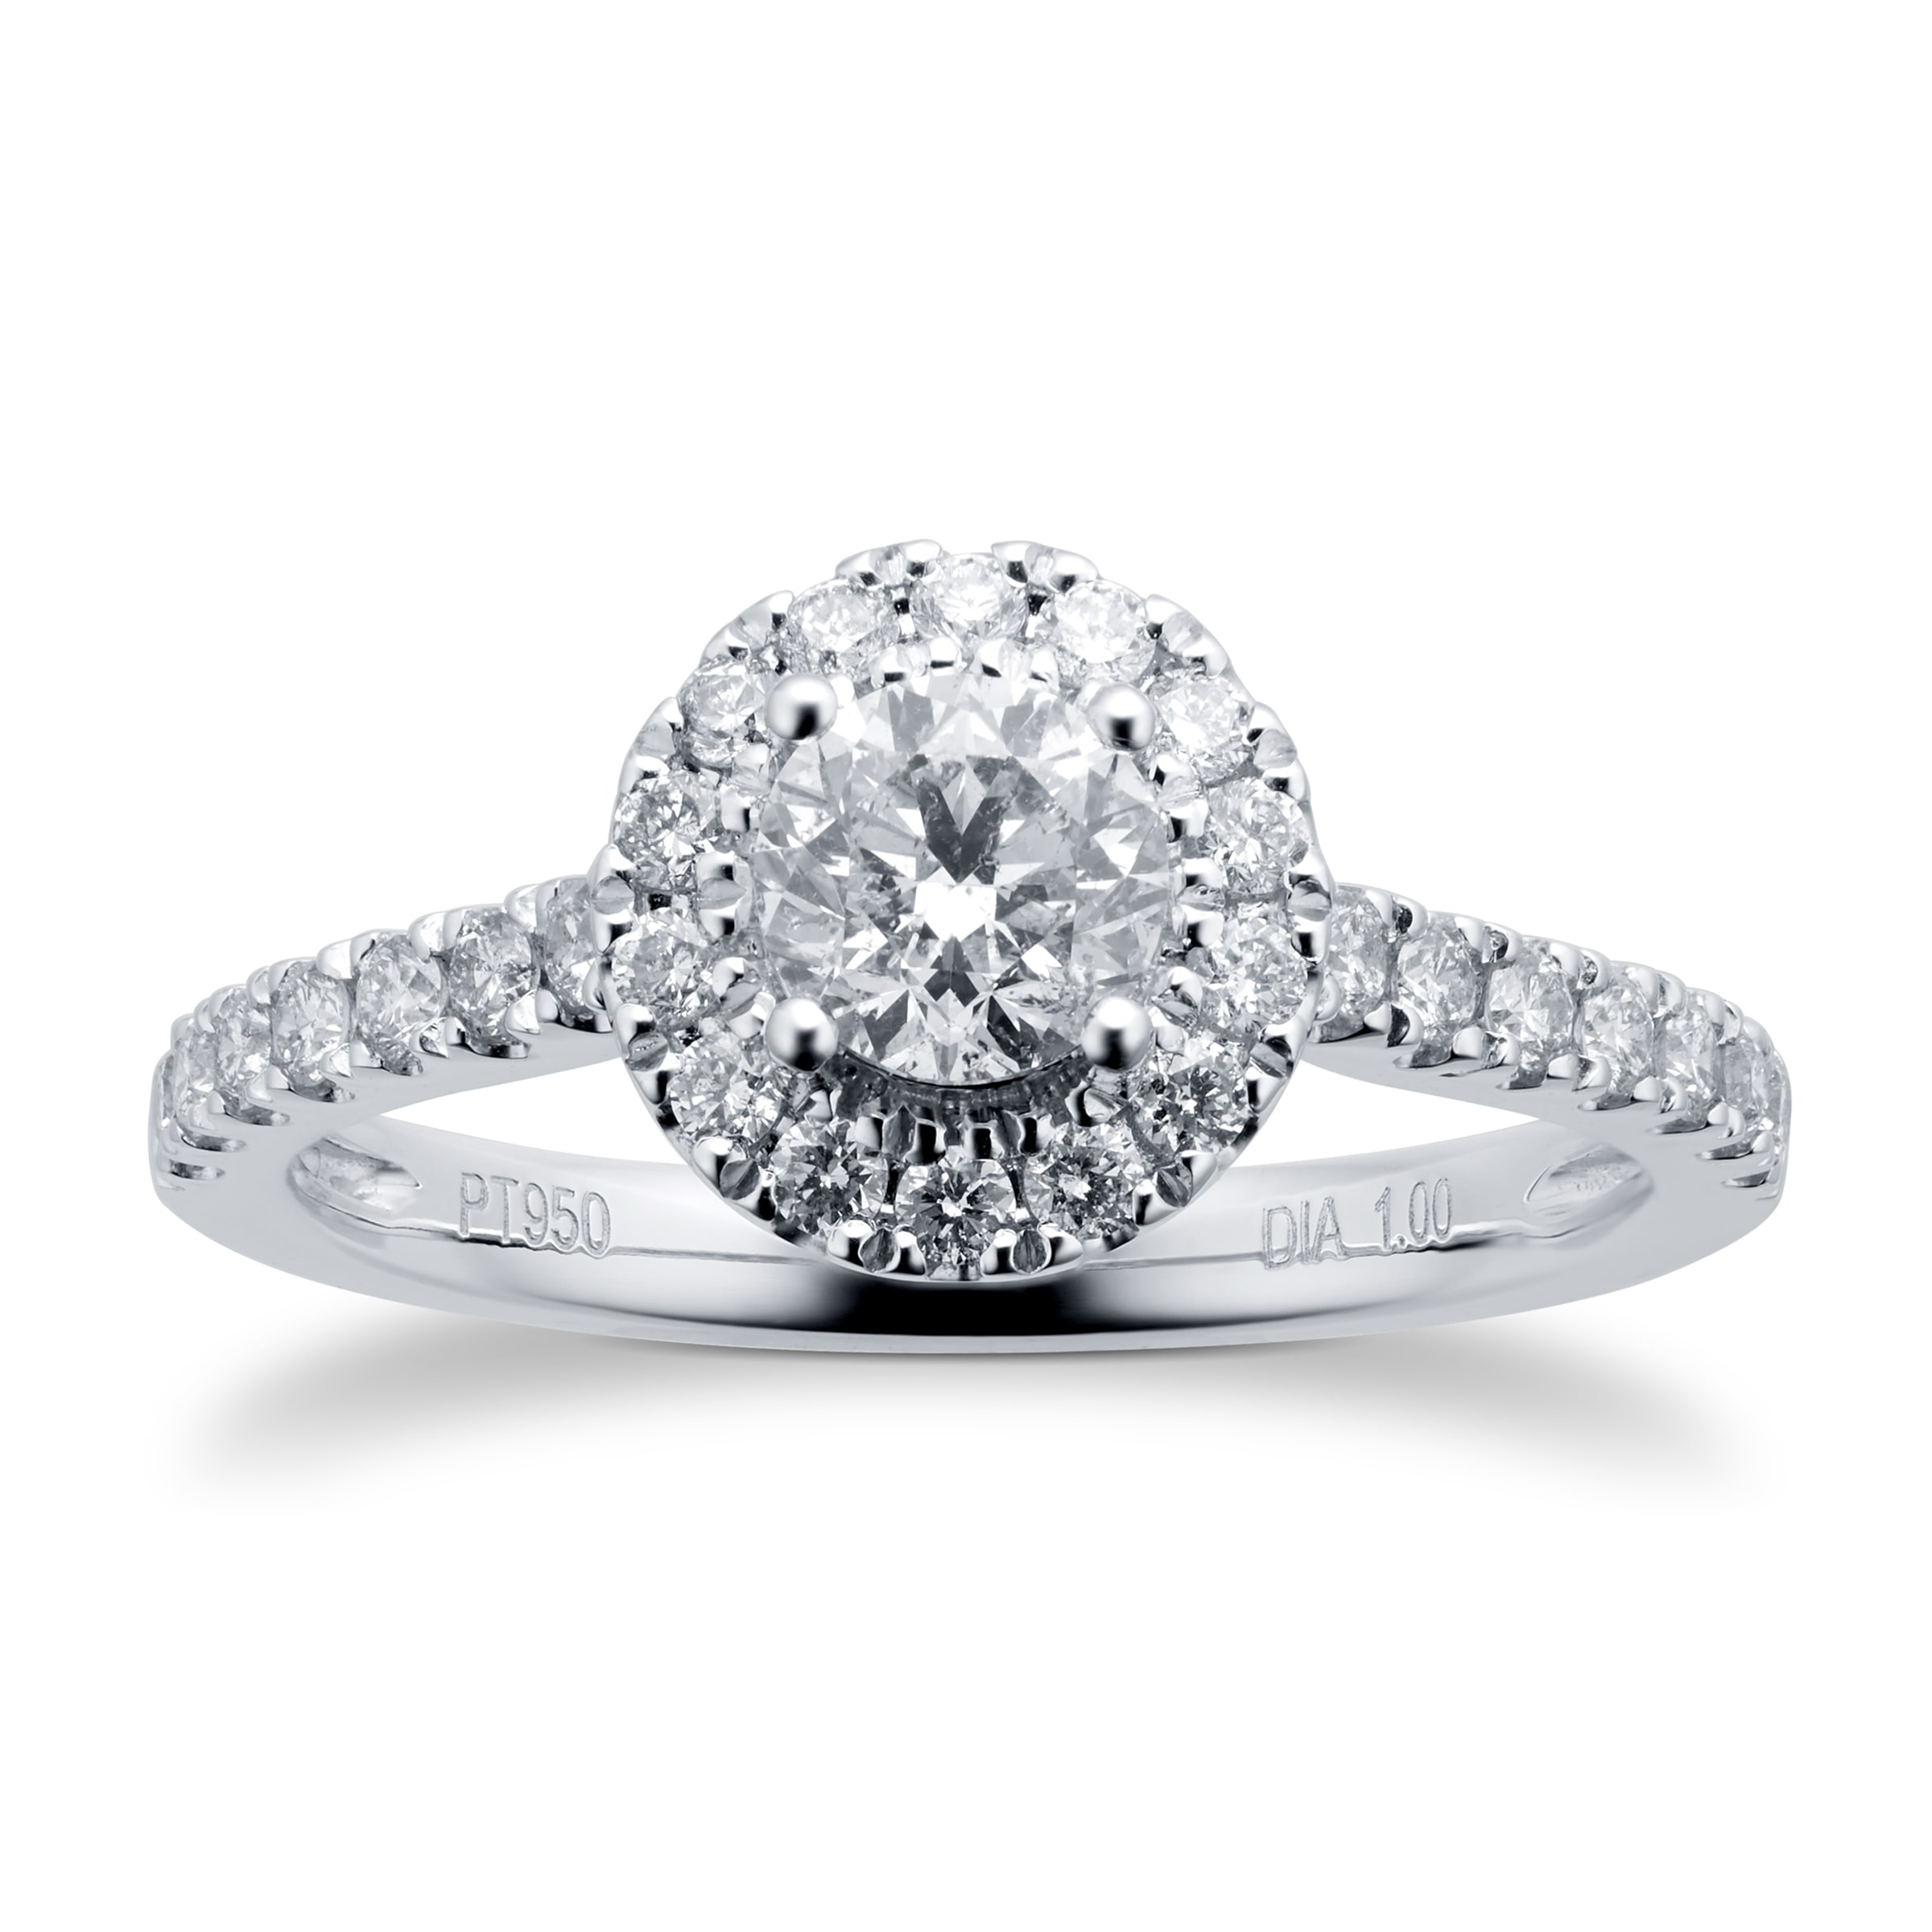 Platinum 1.00cttw Diamond Halo Ring - Ring Size Q